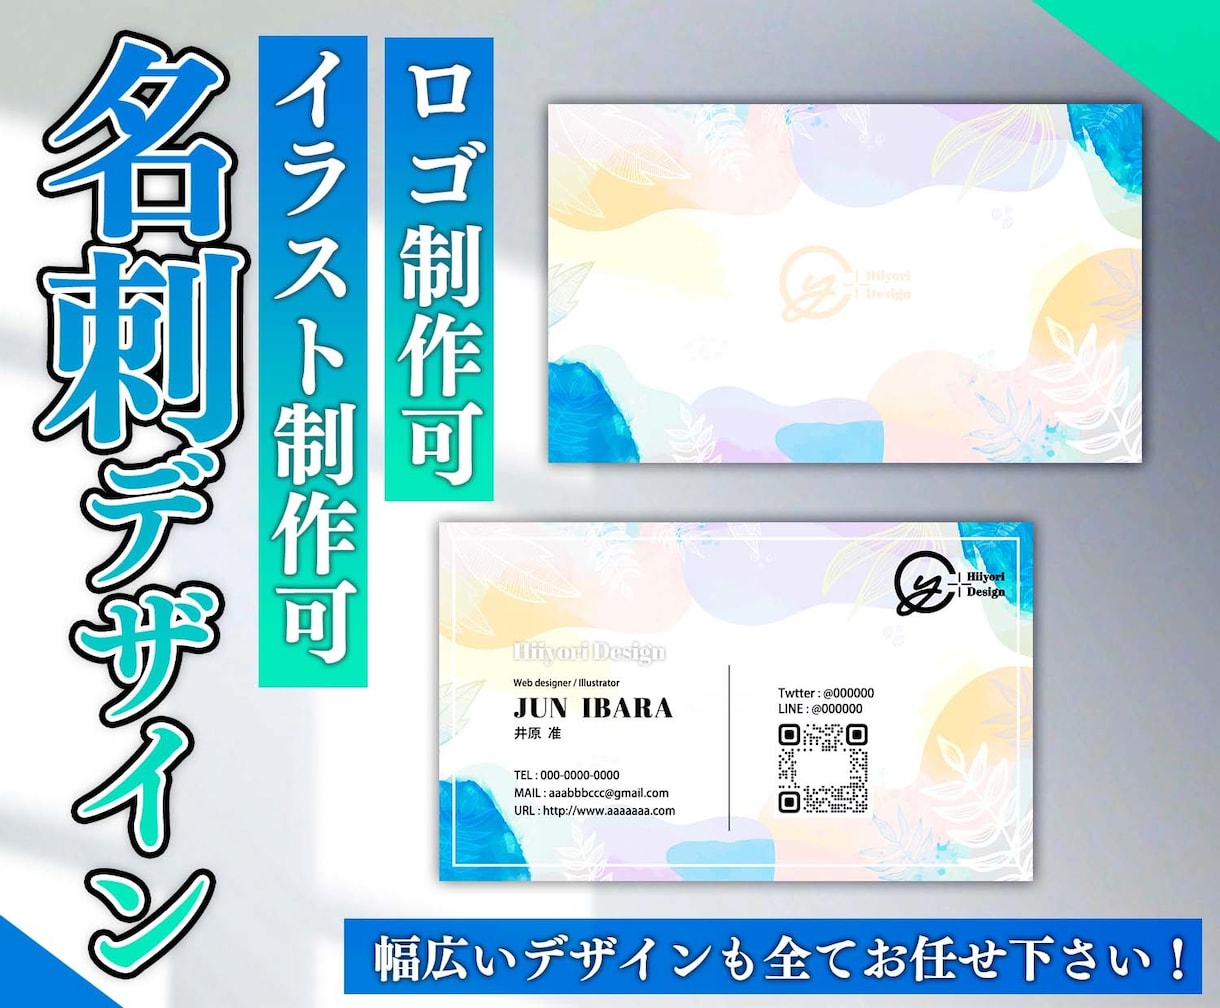 💬Coconala｜We will create your own original business card Jun Ihara 5.0 (4) 10,…